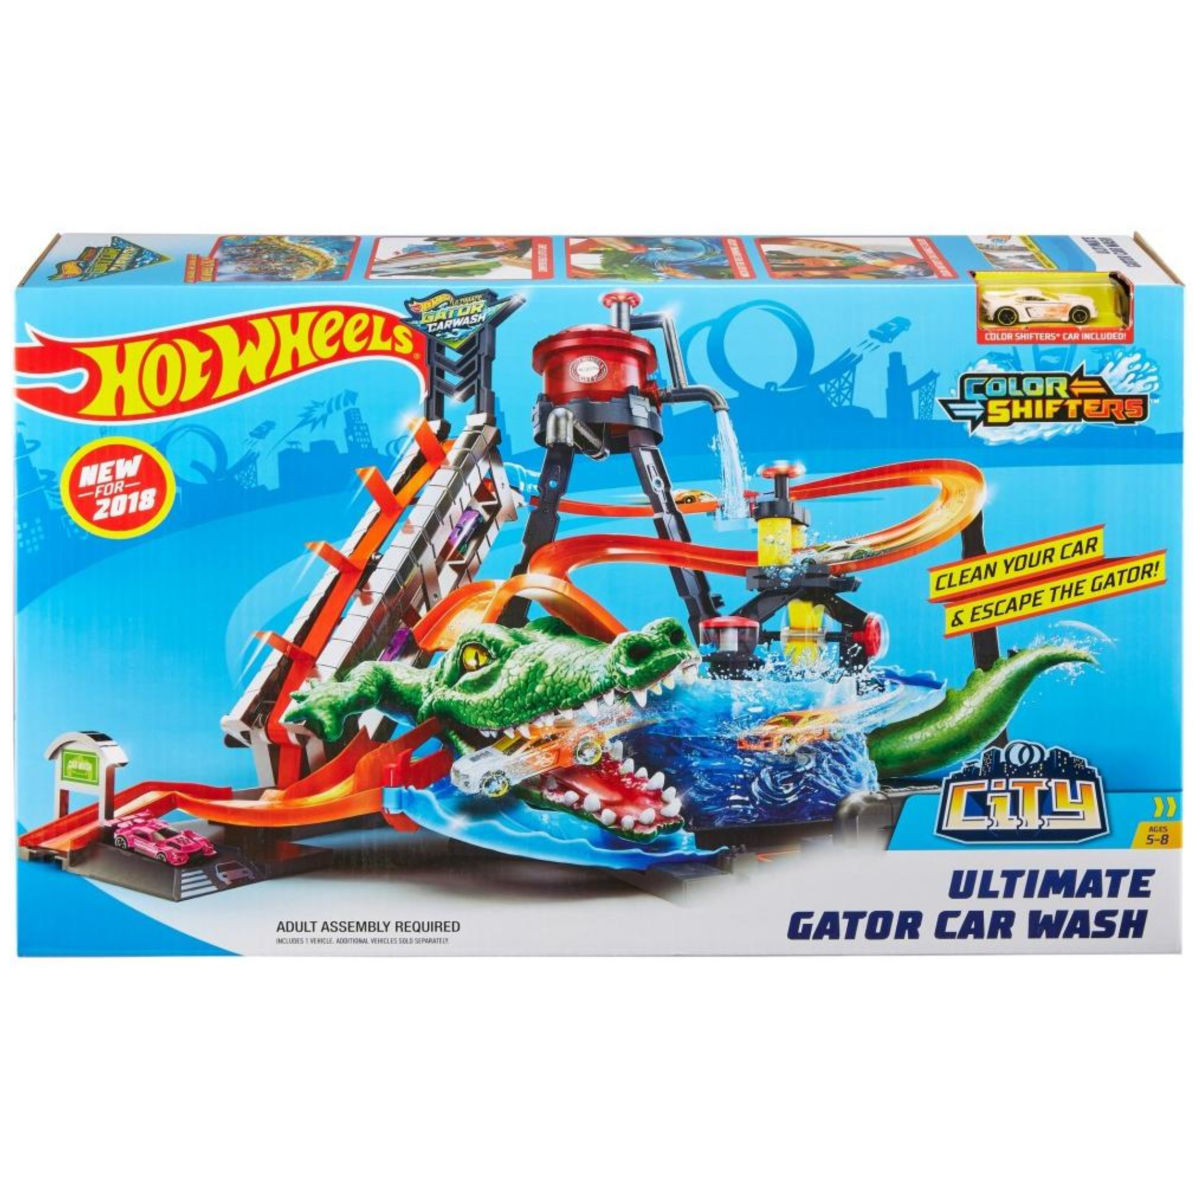 Hot Wheels Ultimate Gator Car Wash Playset